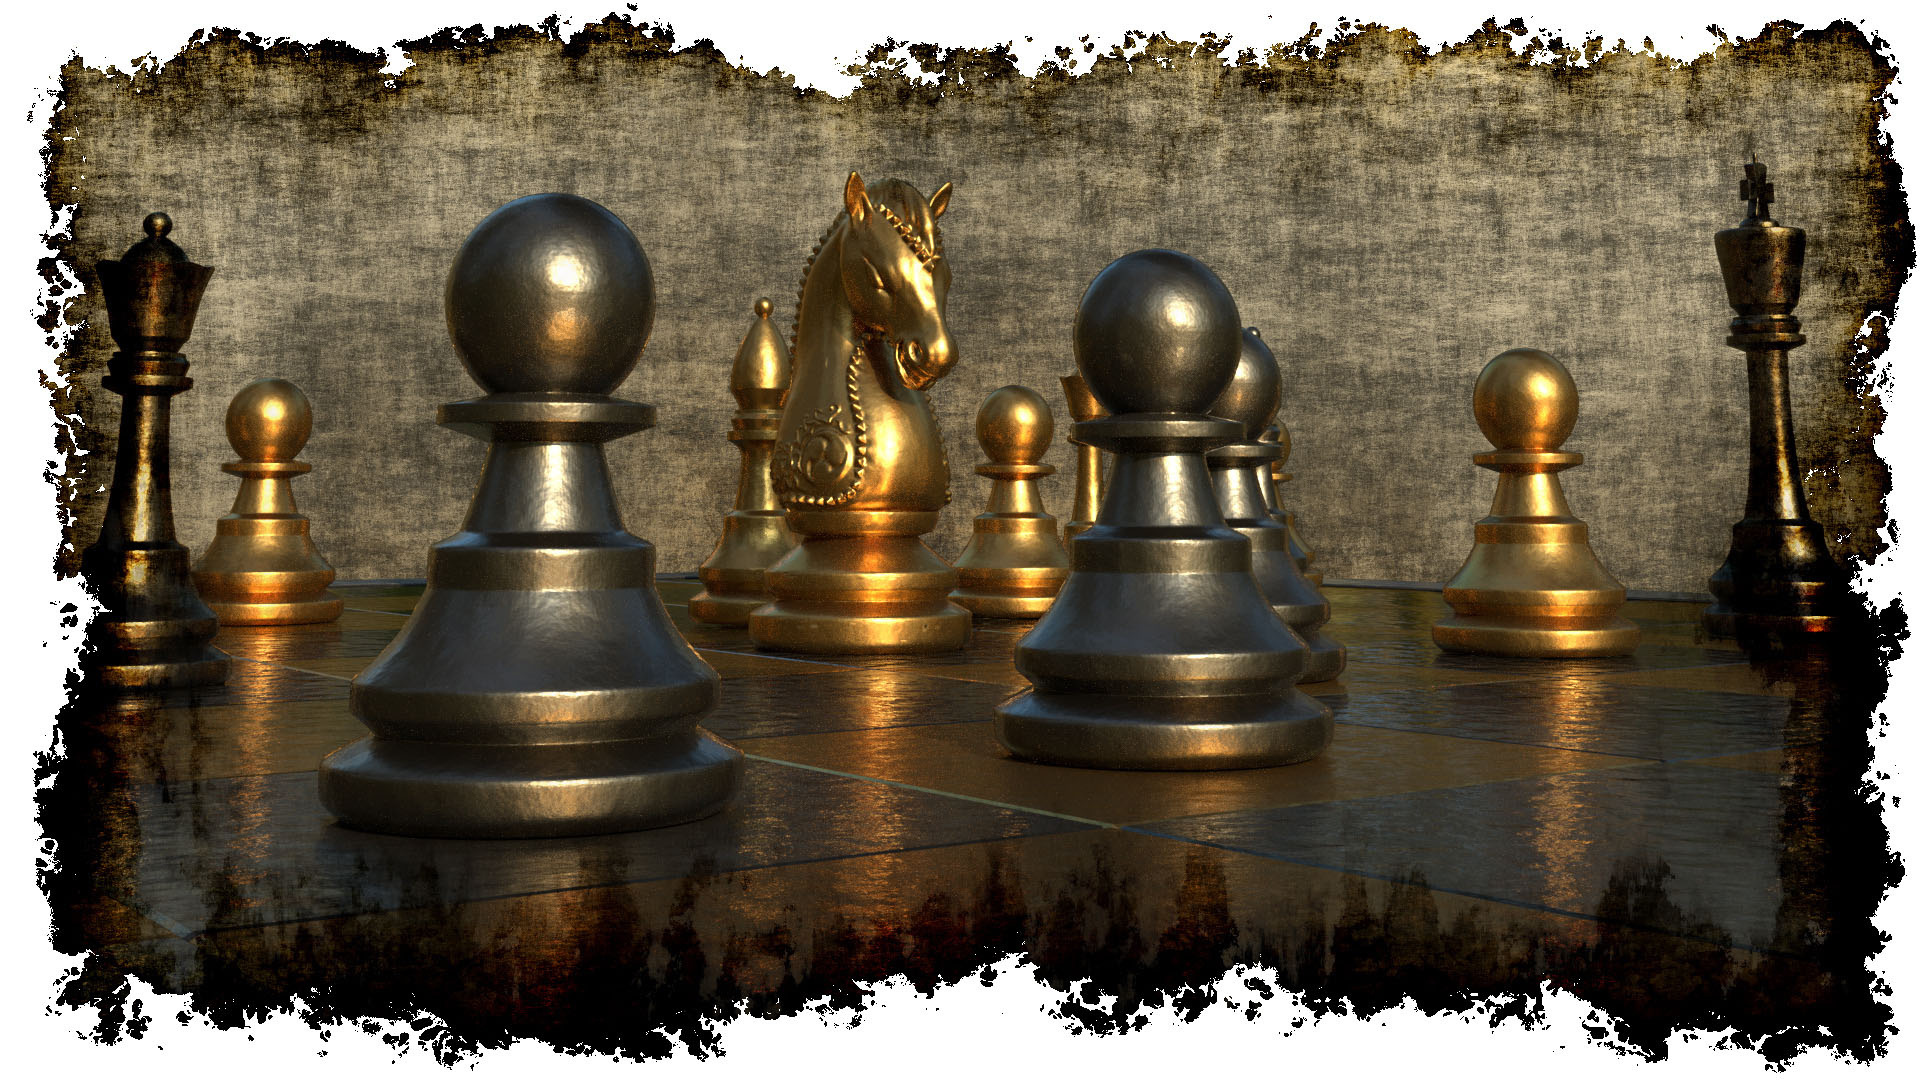 General 1920x1080 chess board games digital art pawns gold